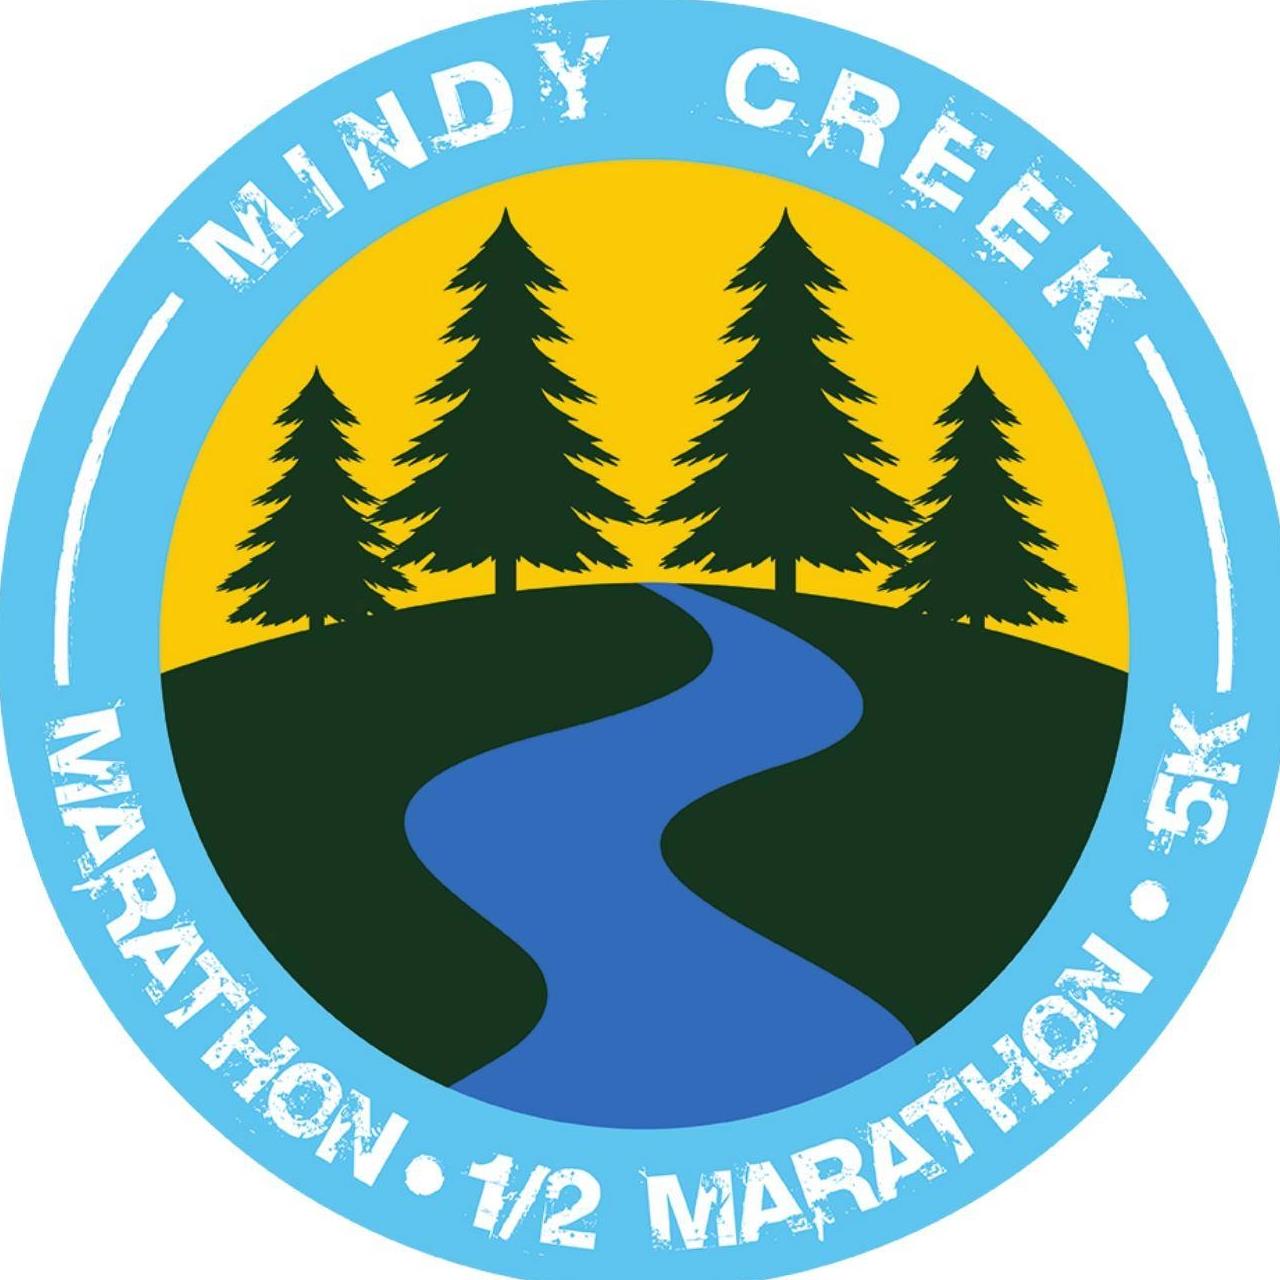 Mindy Creek Trail Races logo on RaceRaves